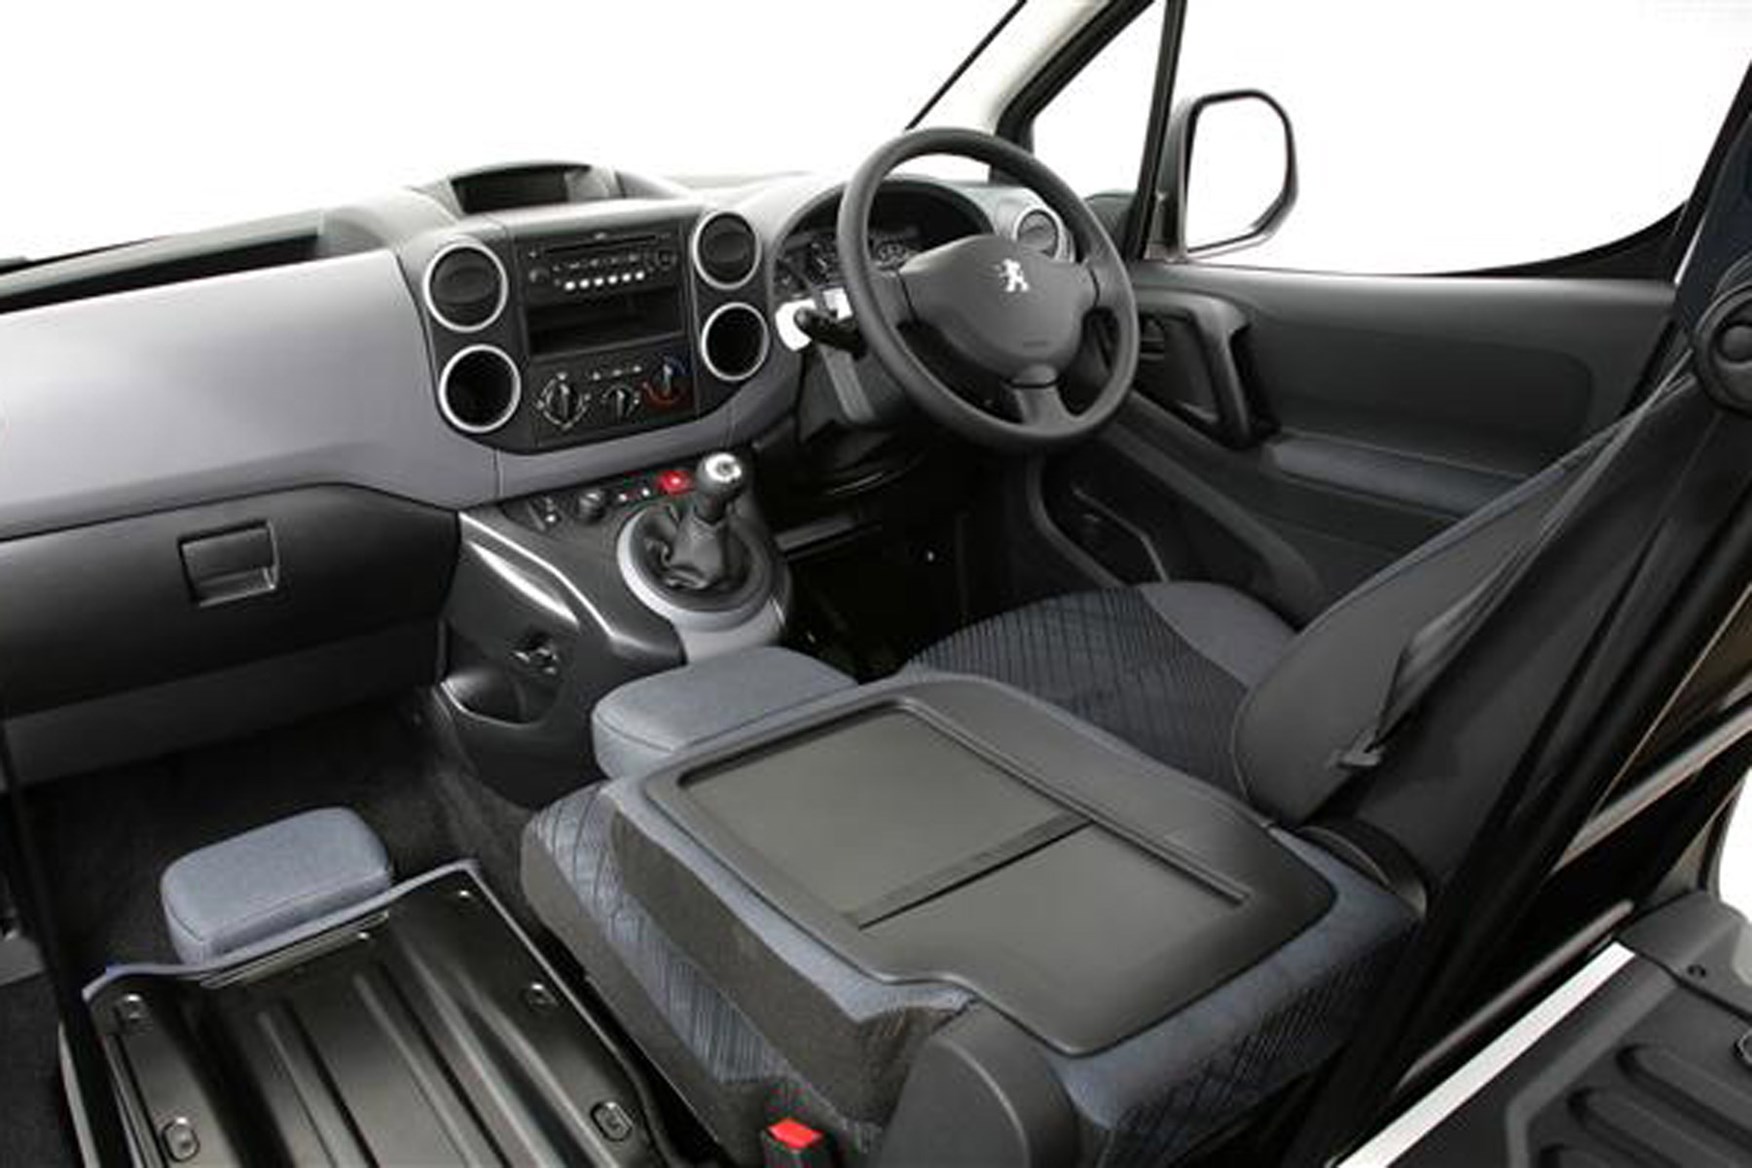 Peugeot Partner full review on Parkers Vans - cabin interior